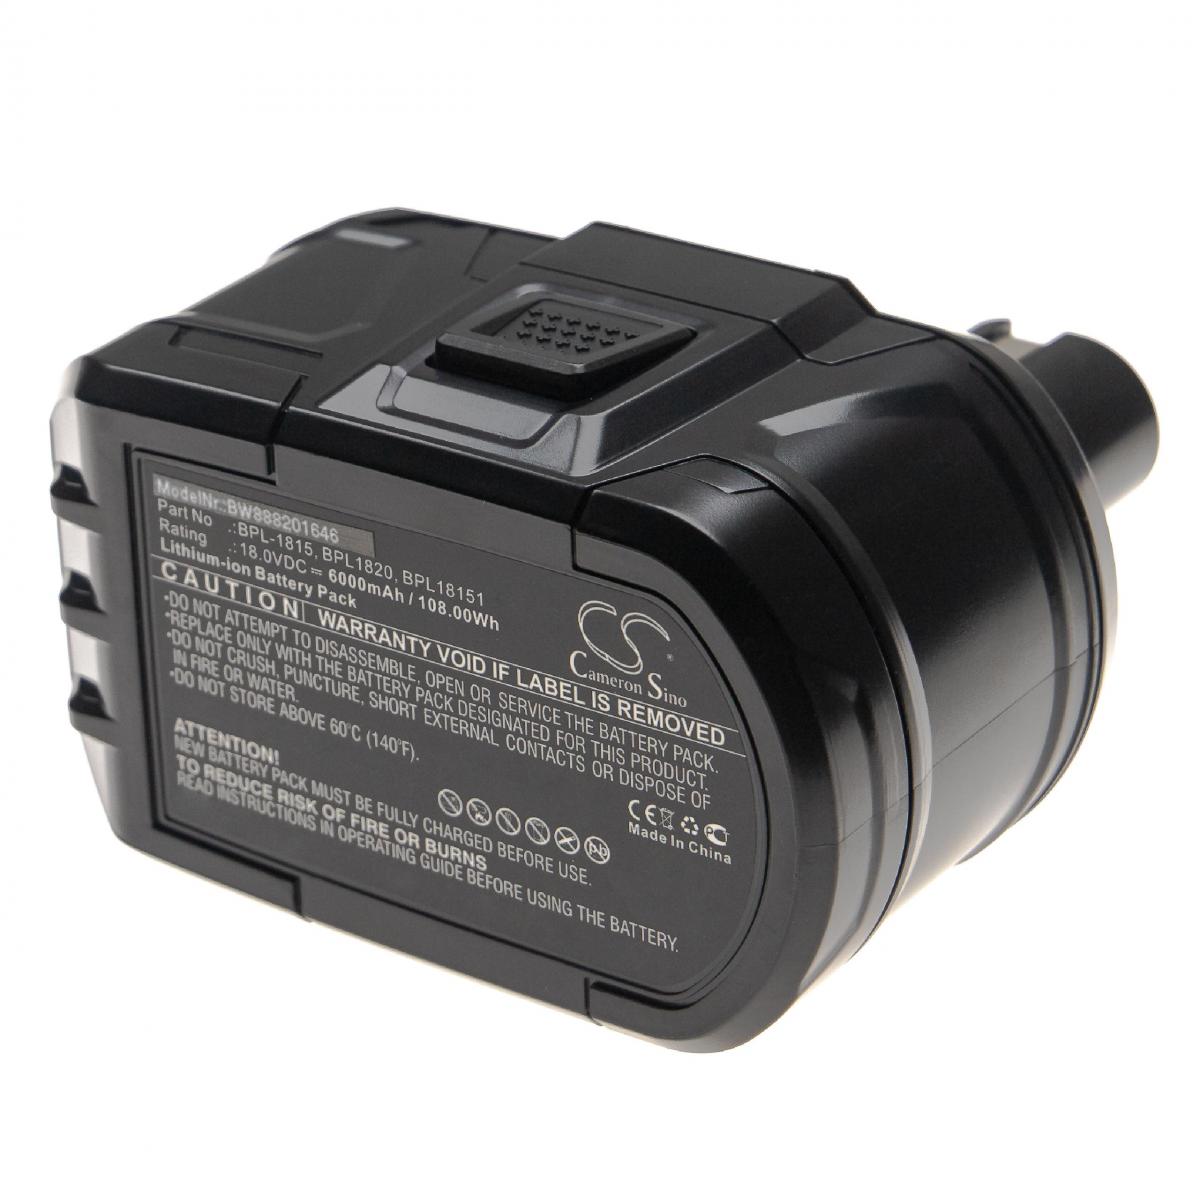 Vhbw - vhbw Batterie compatible avec Ryobi P520, P521, P530, P540, P570, P600, P610, P700, P710, P730, P731 outil électrique (6000mAh Li-Ion 18V) - Clouterie